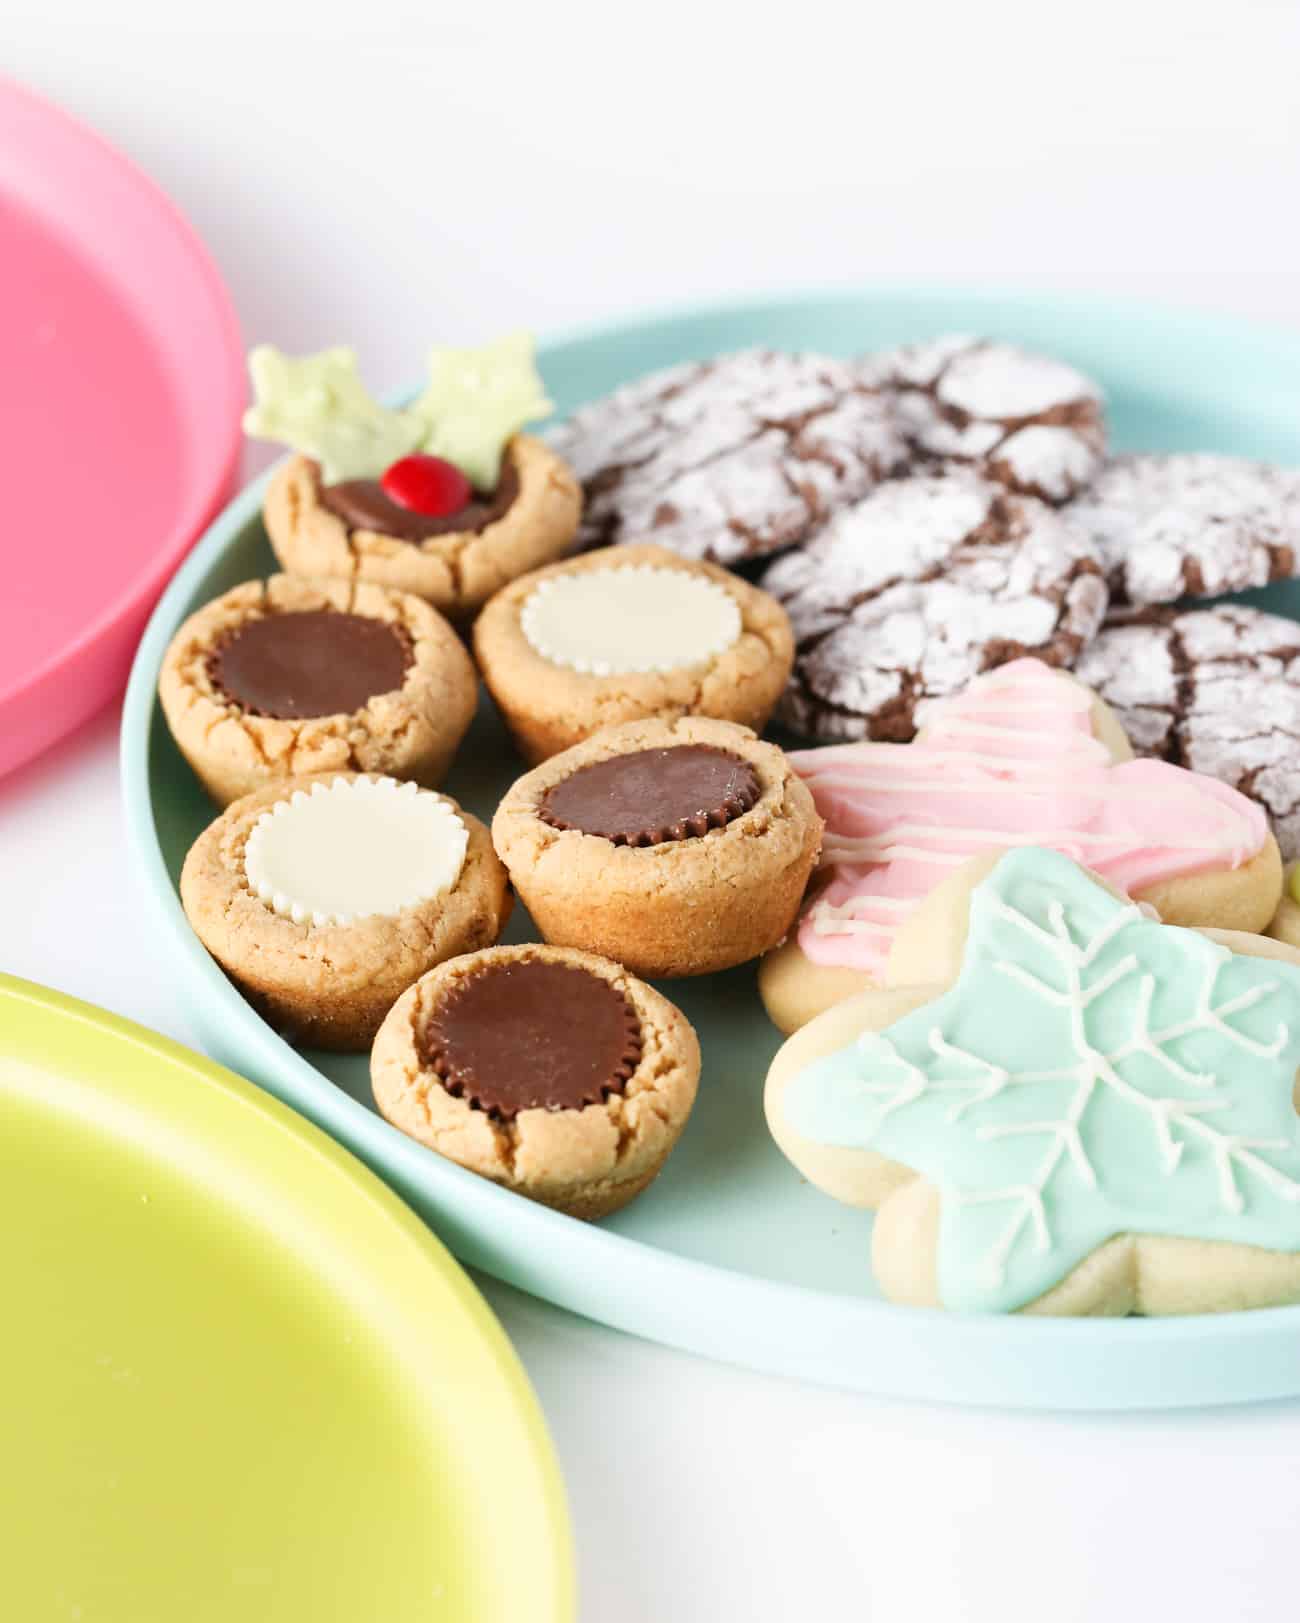 DIY Cookie tray with peanut butter cup cookies, sugar cookies, and brownie cookies.